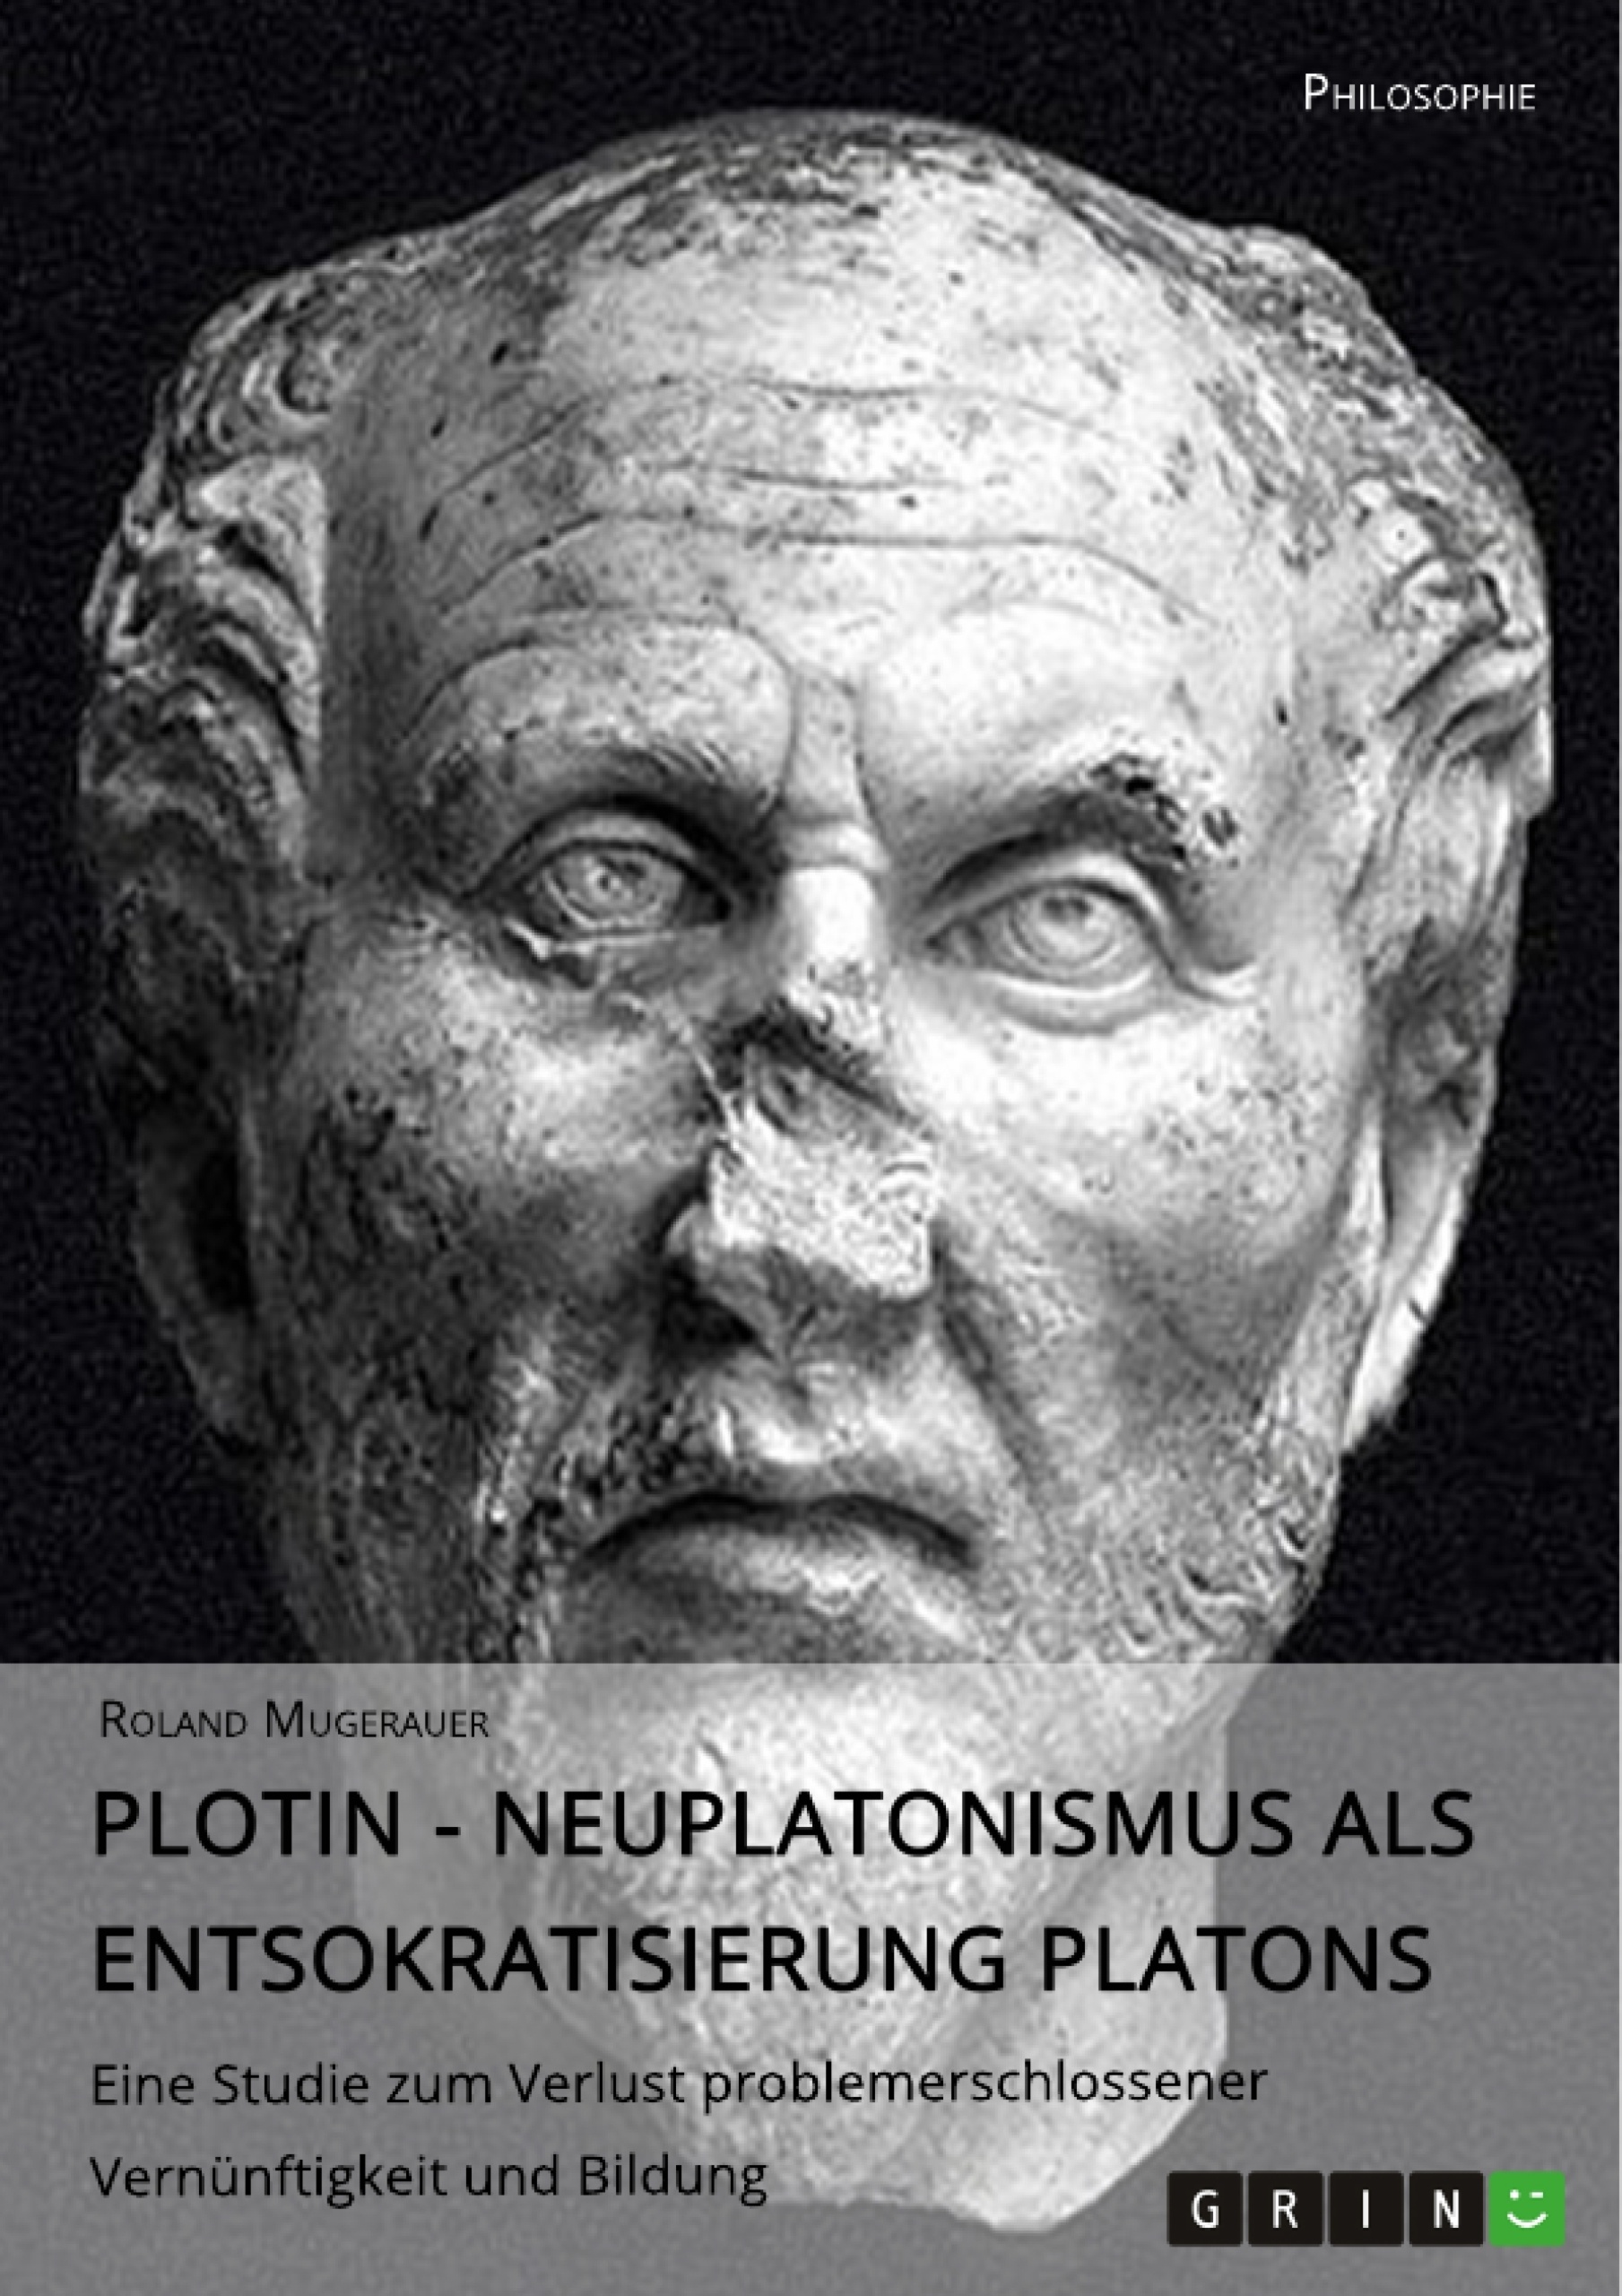 Title: Plotin - Neuplatonismus als Entsokratisierung Platons